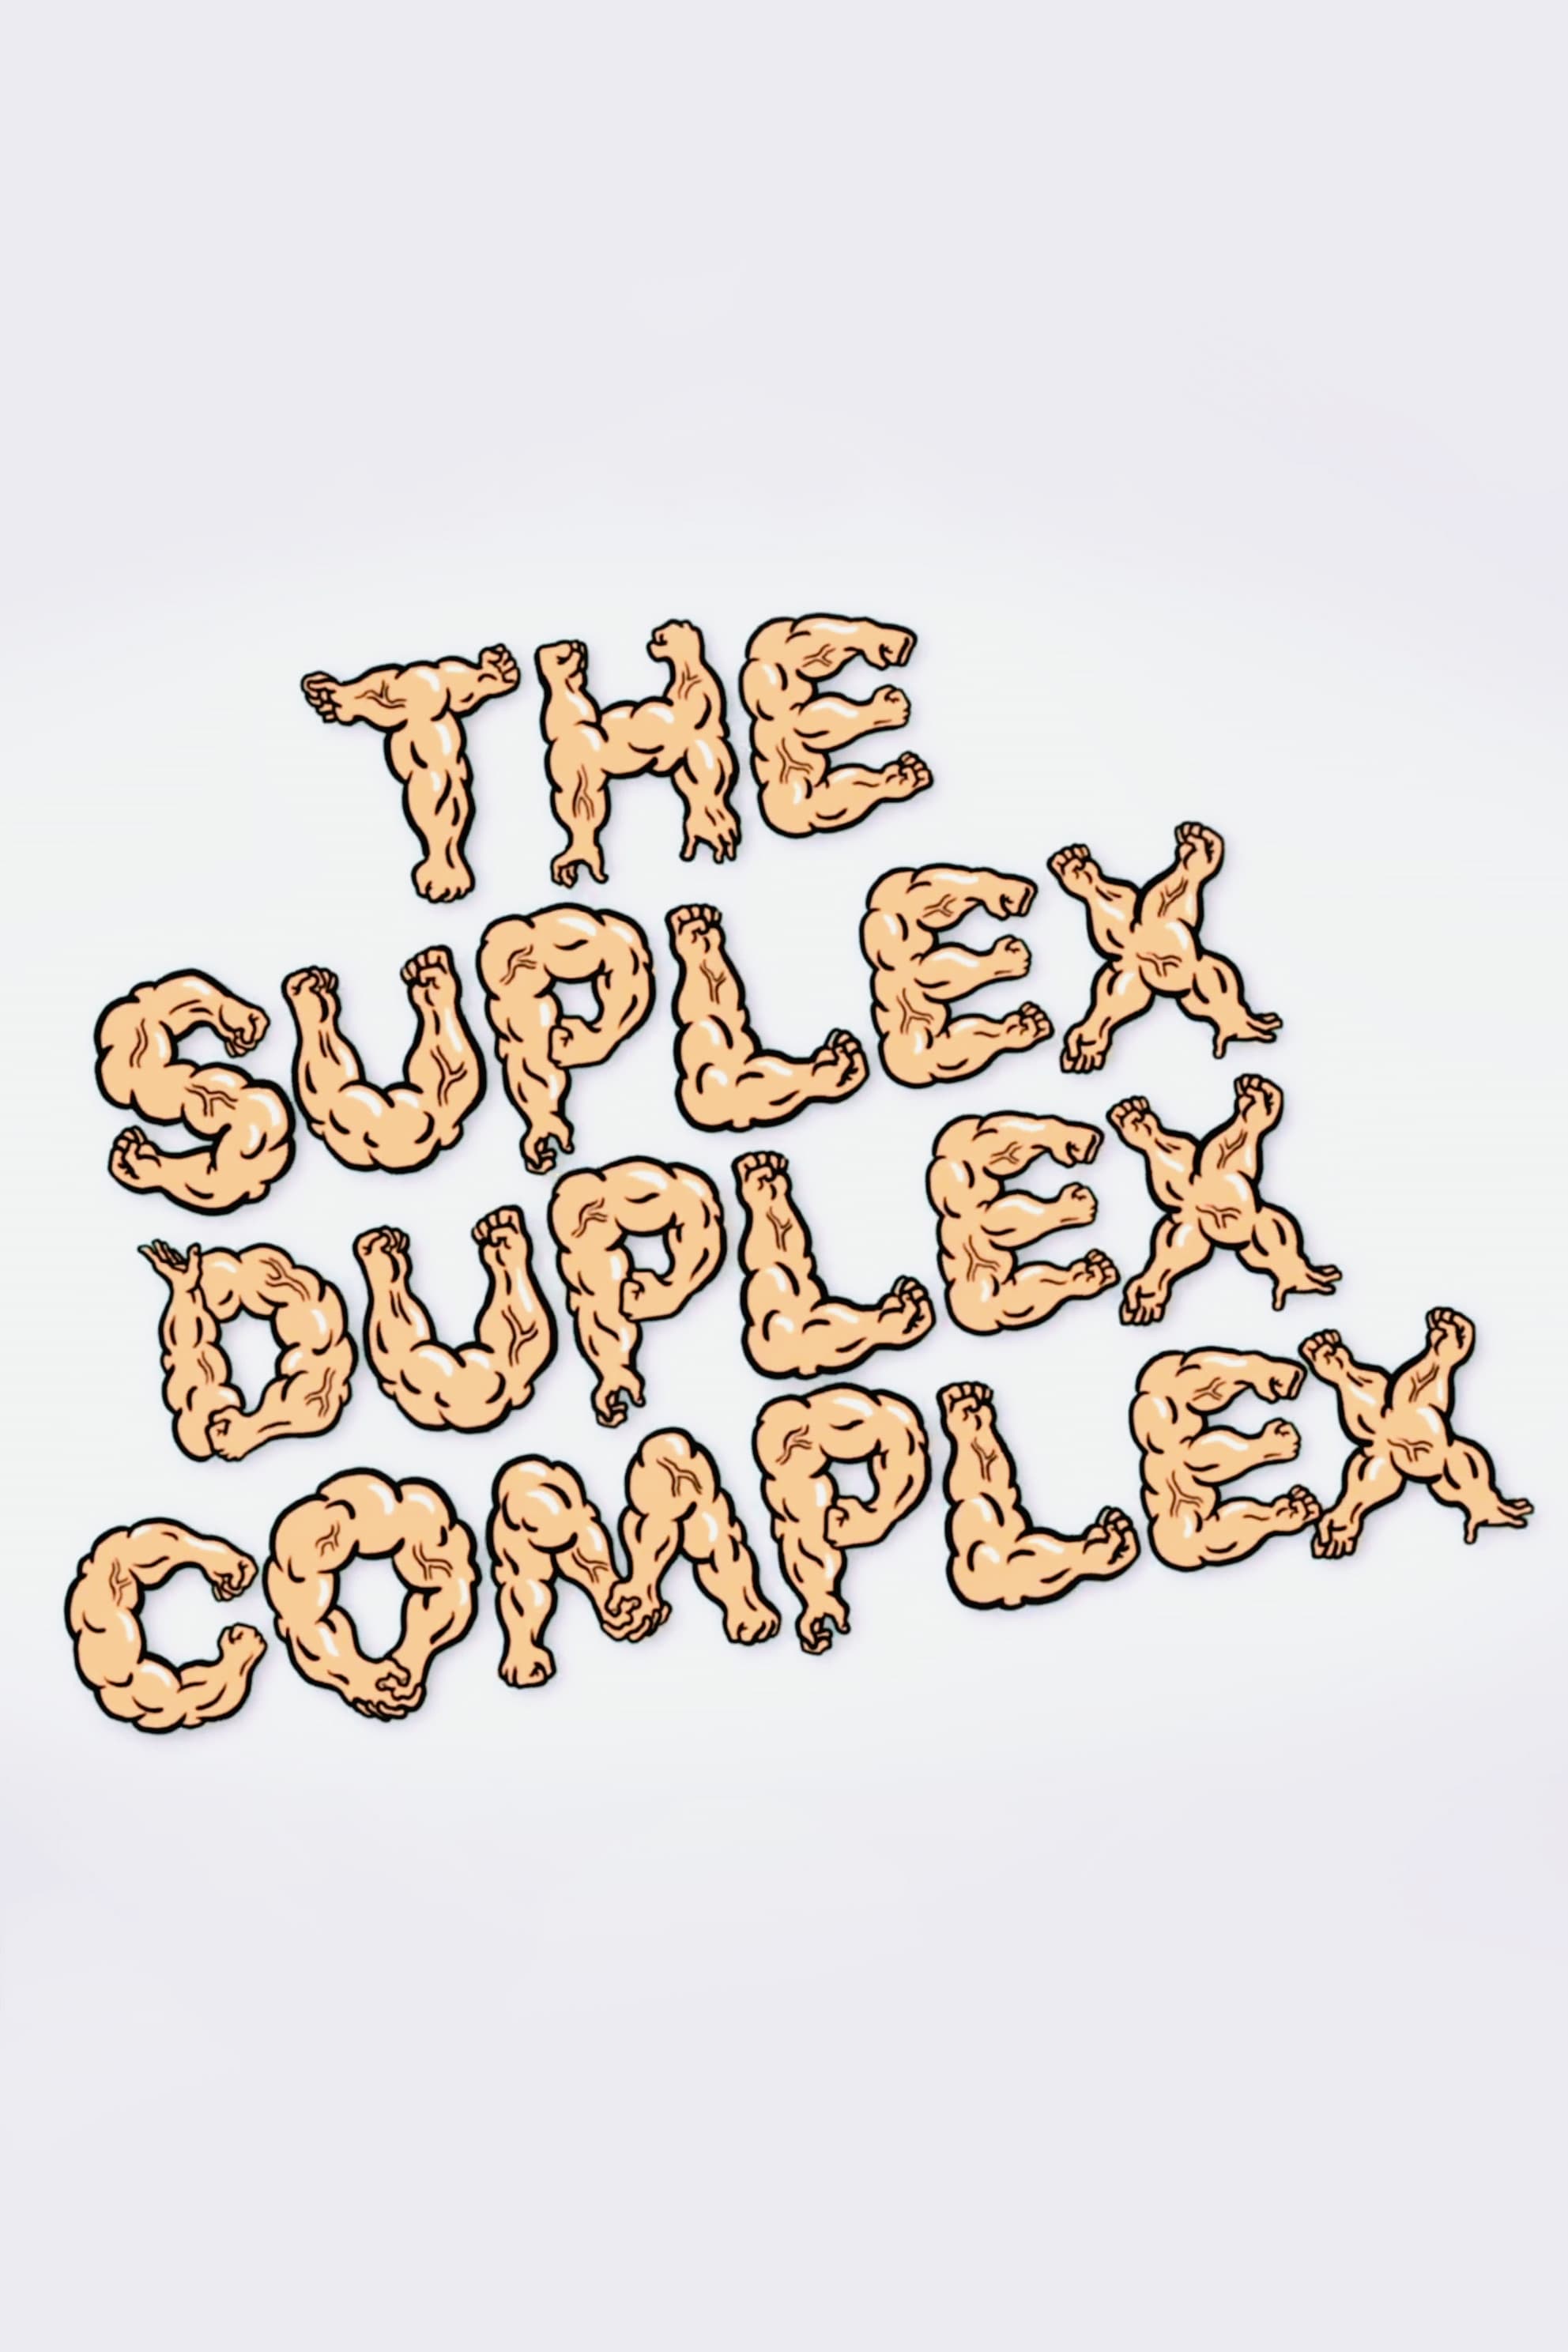 The Suplex Duplex Complex film